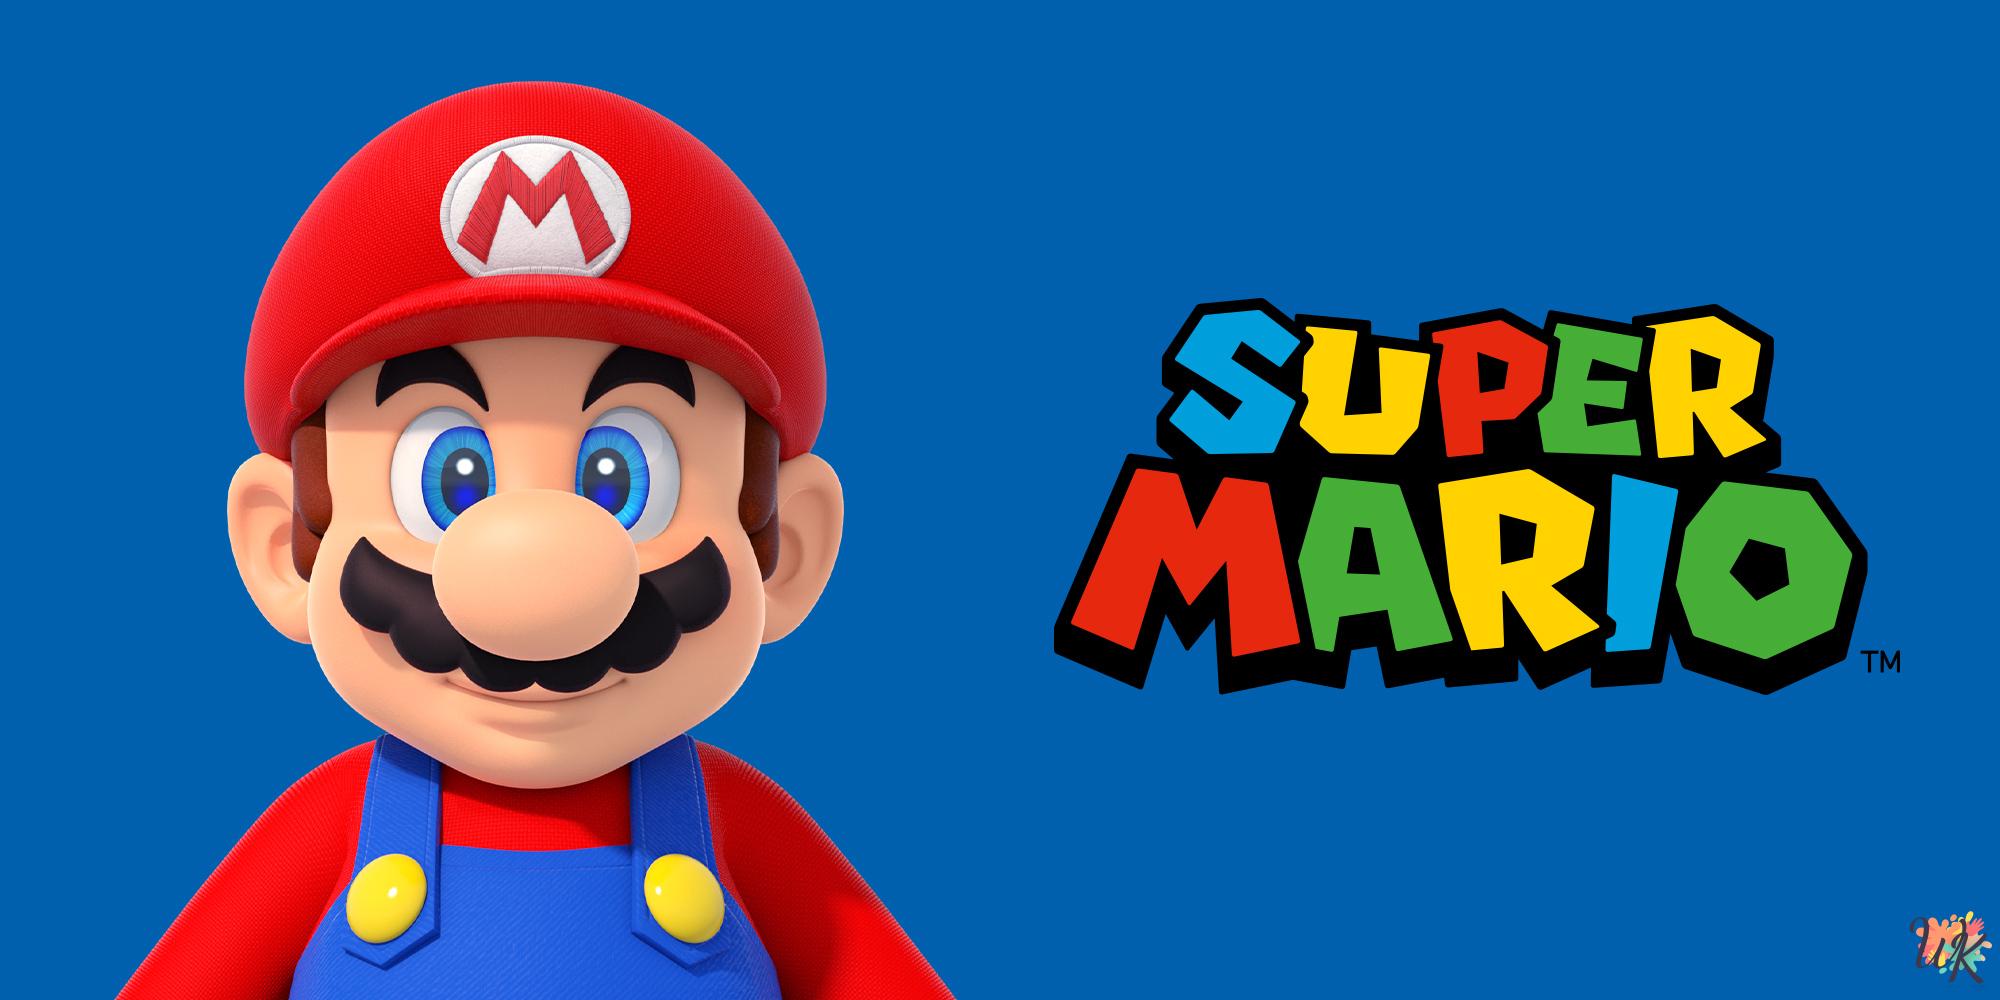 38 Super Mario coloring pages